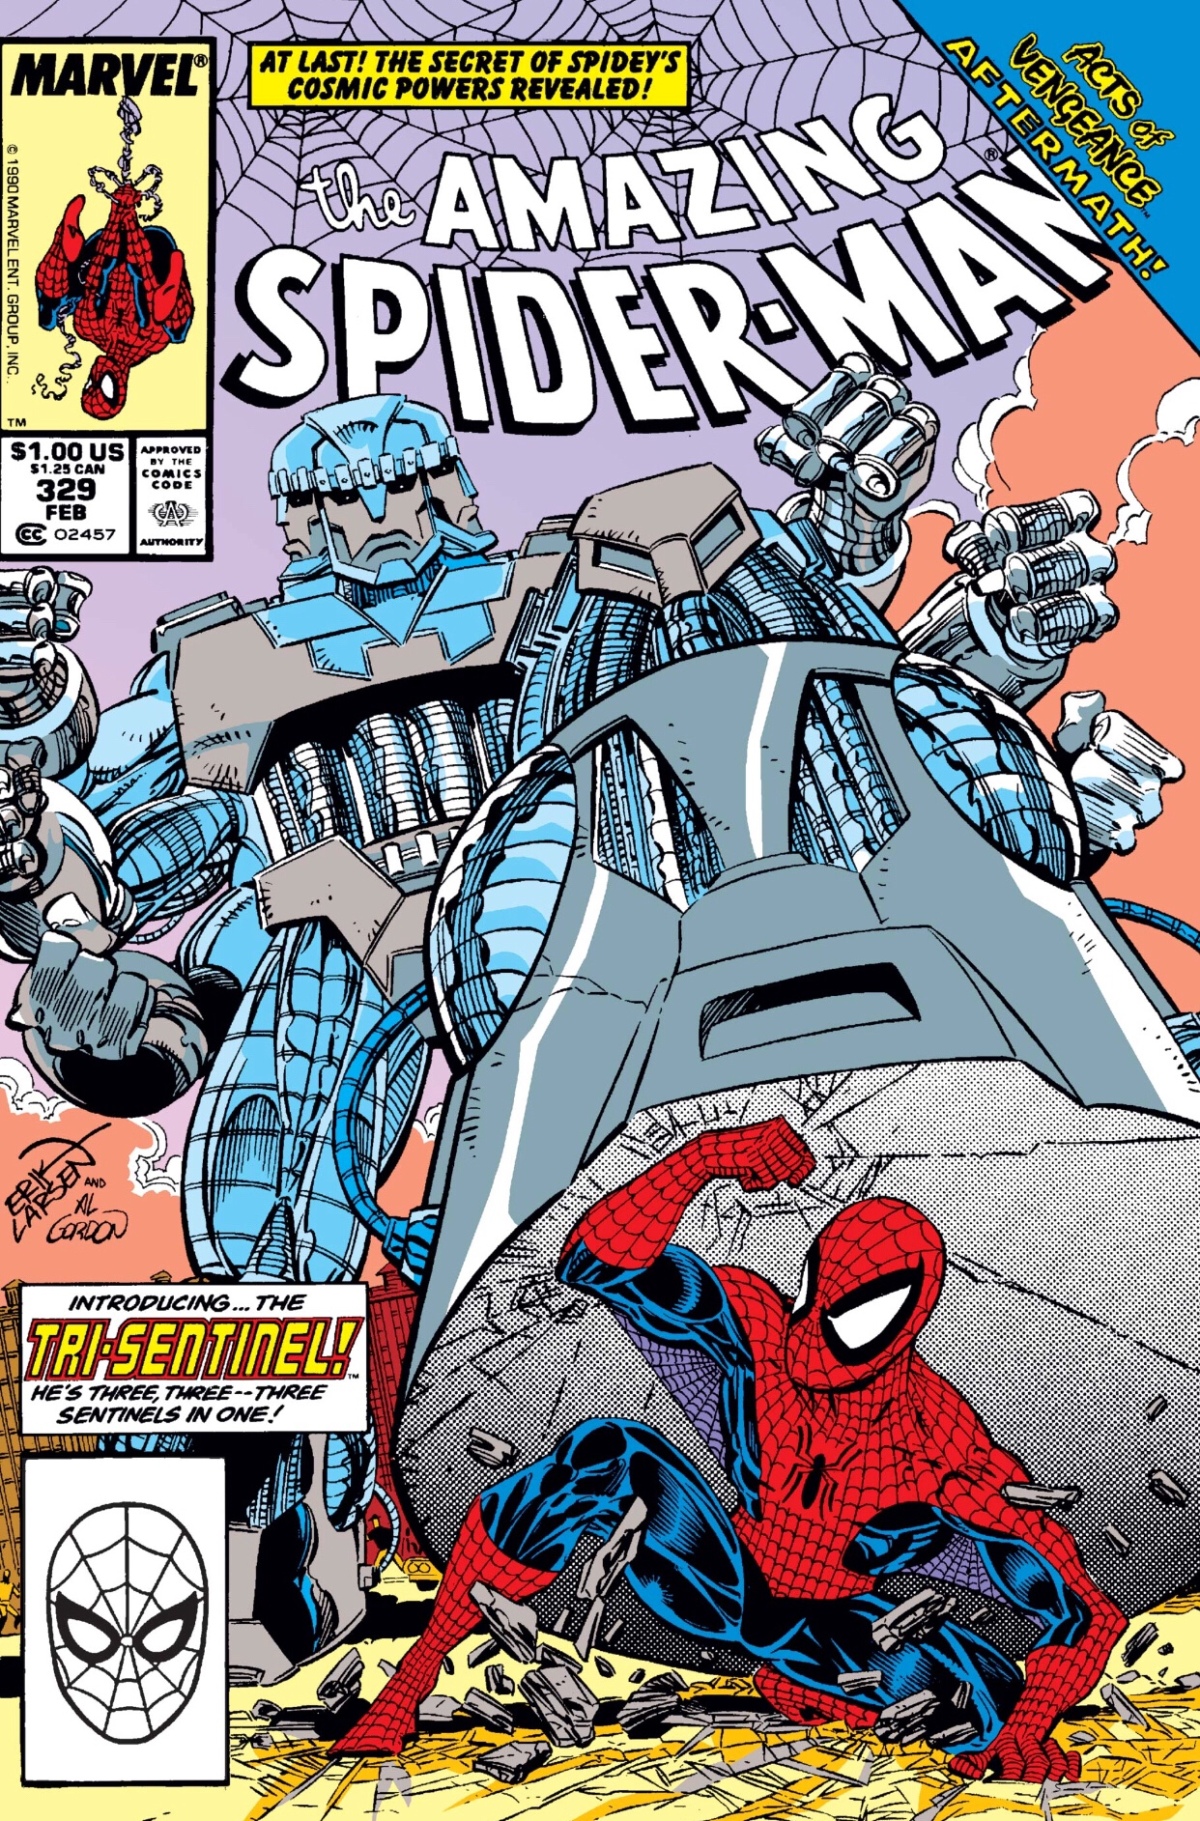 Cosmic Powered Amazing Spider-Man vs. Graviton & The Tri-Sentinel (The Amazing Spider-Man #329, 1990)